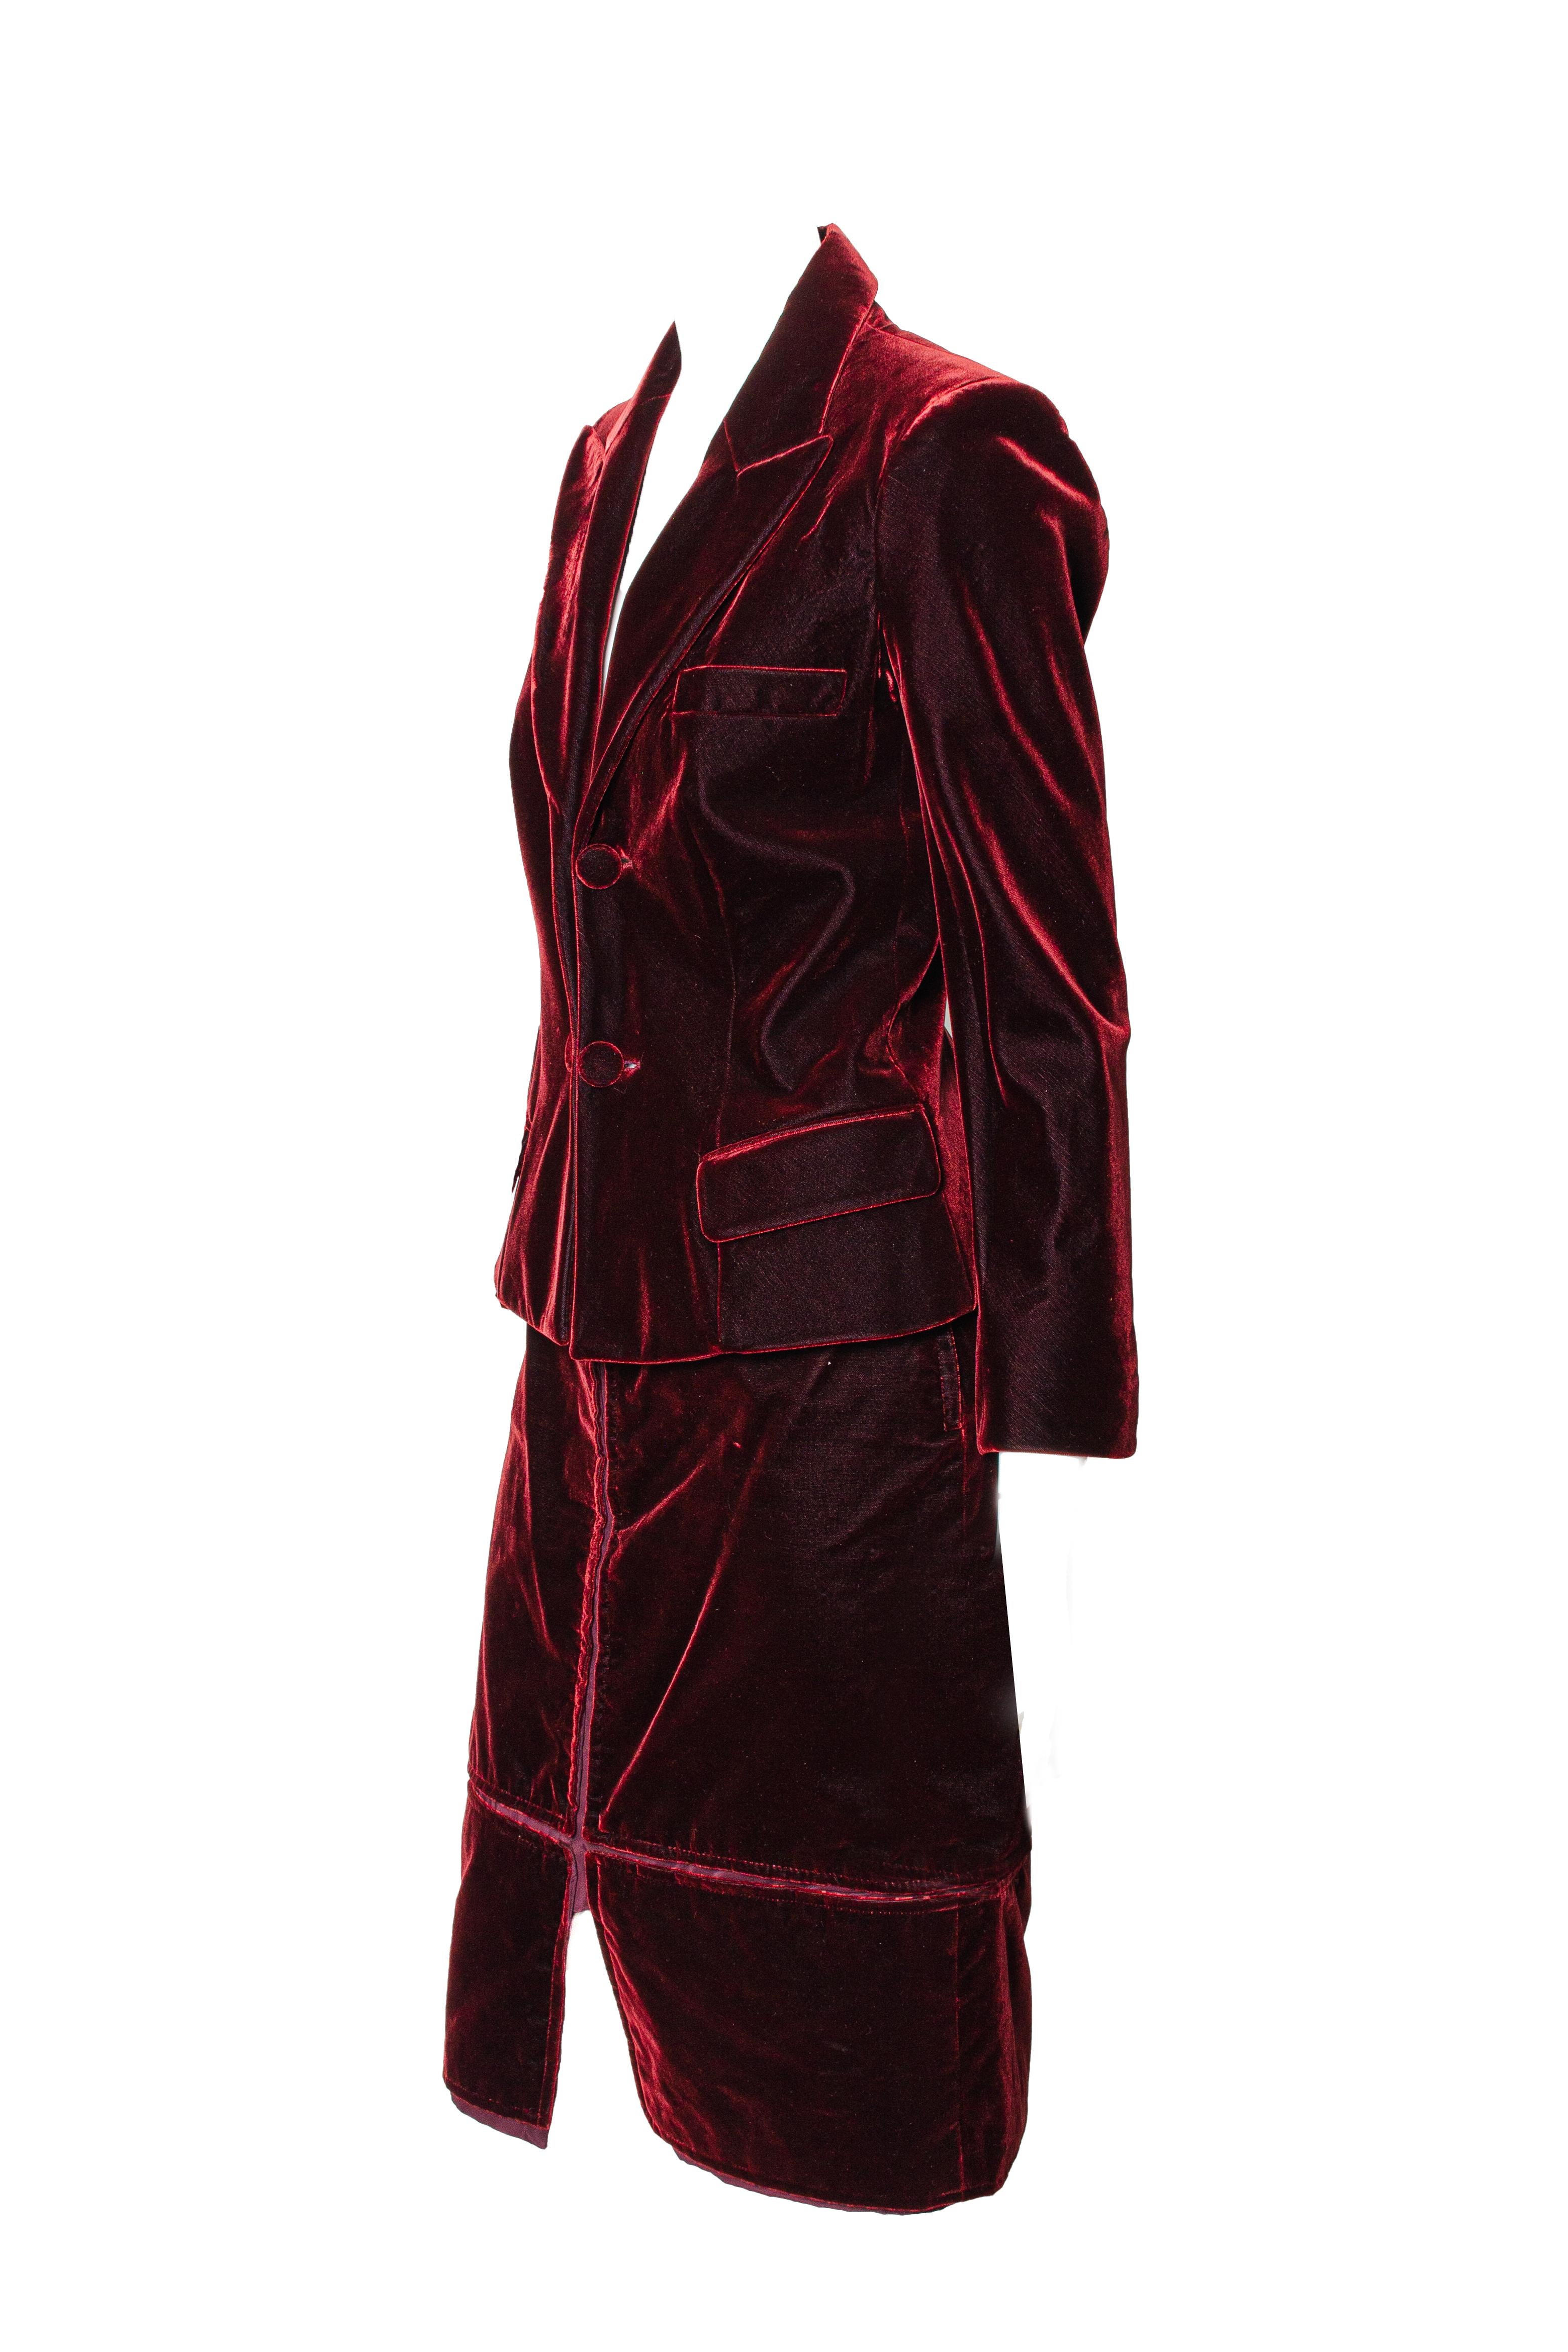 red velvet in suits